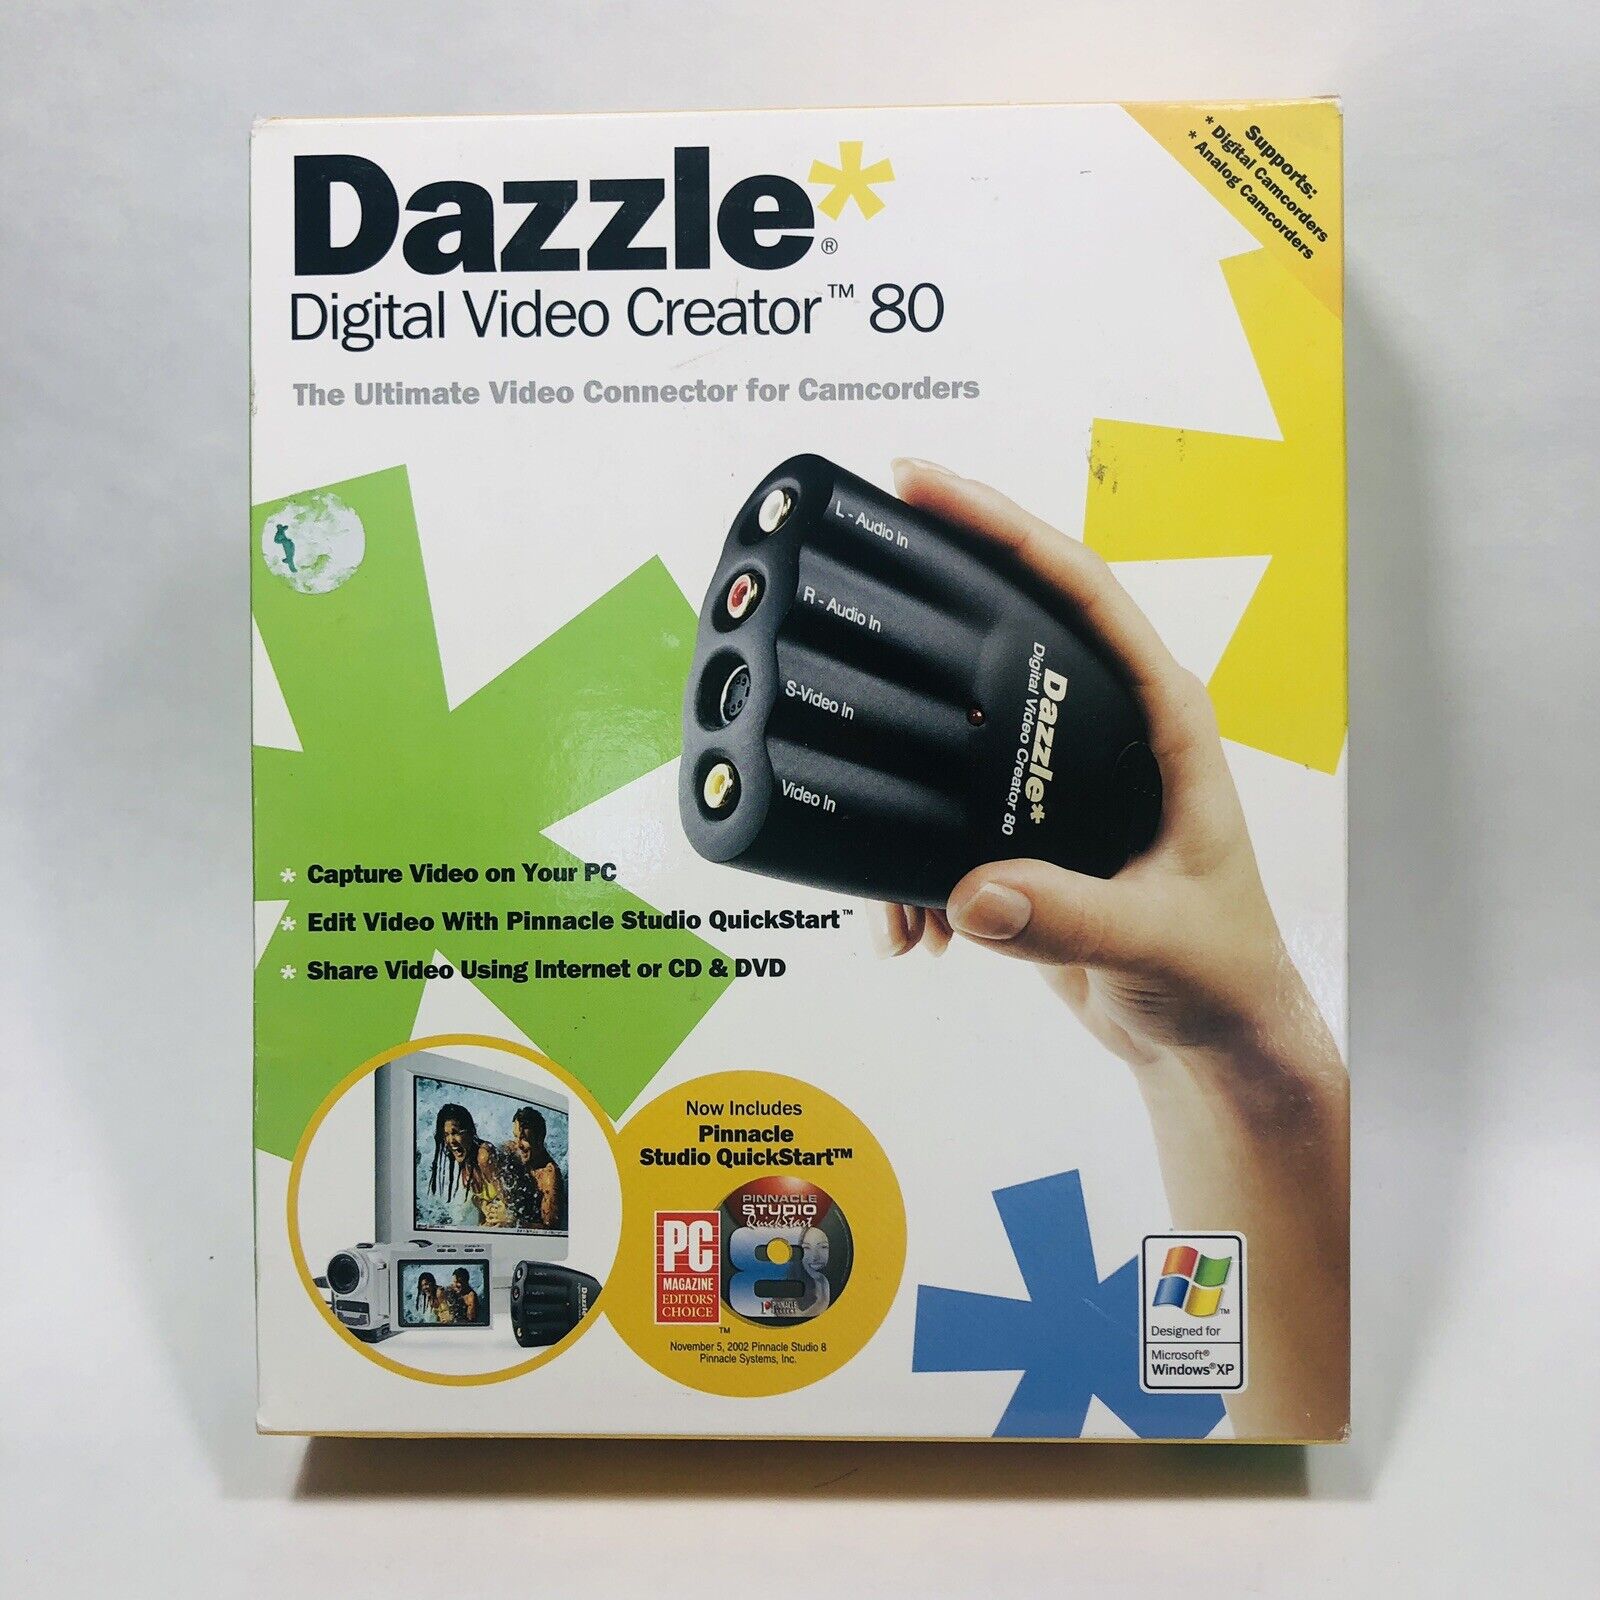 Dazzle Multimedia DM-5400 Digital Video Creator 80